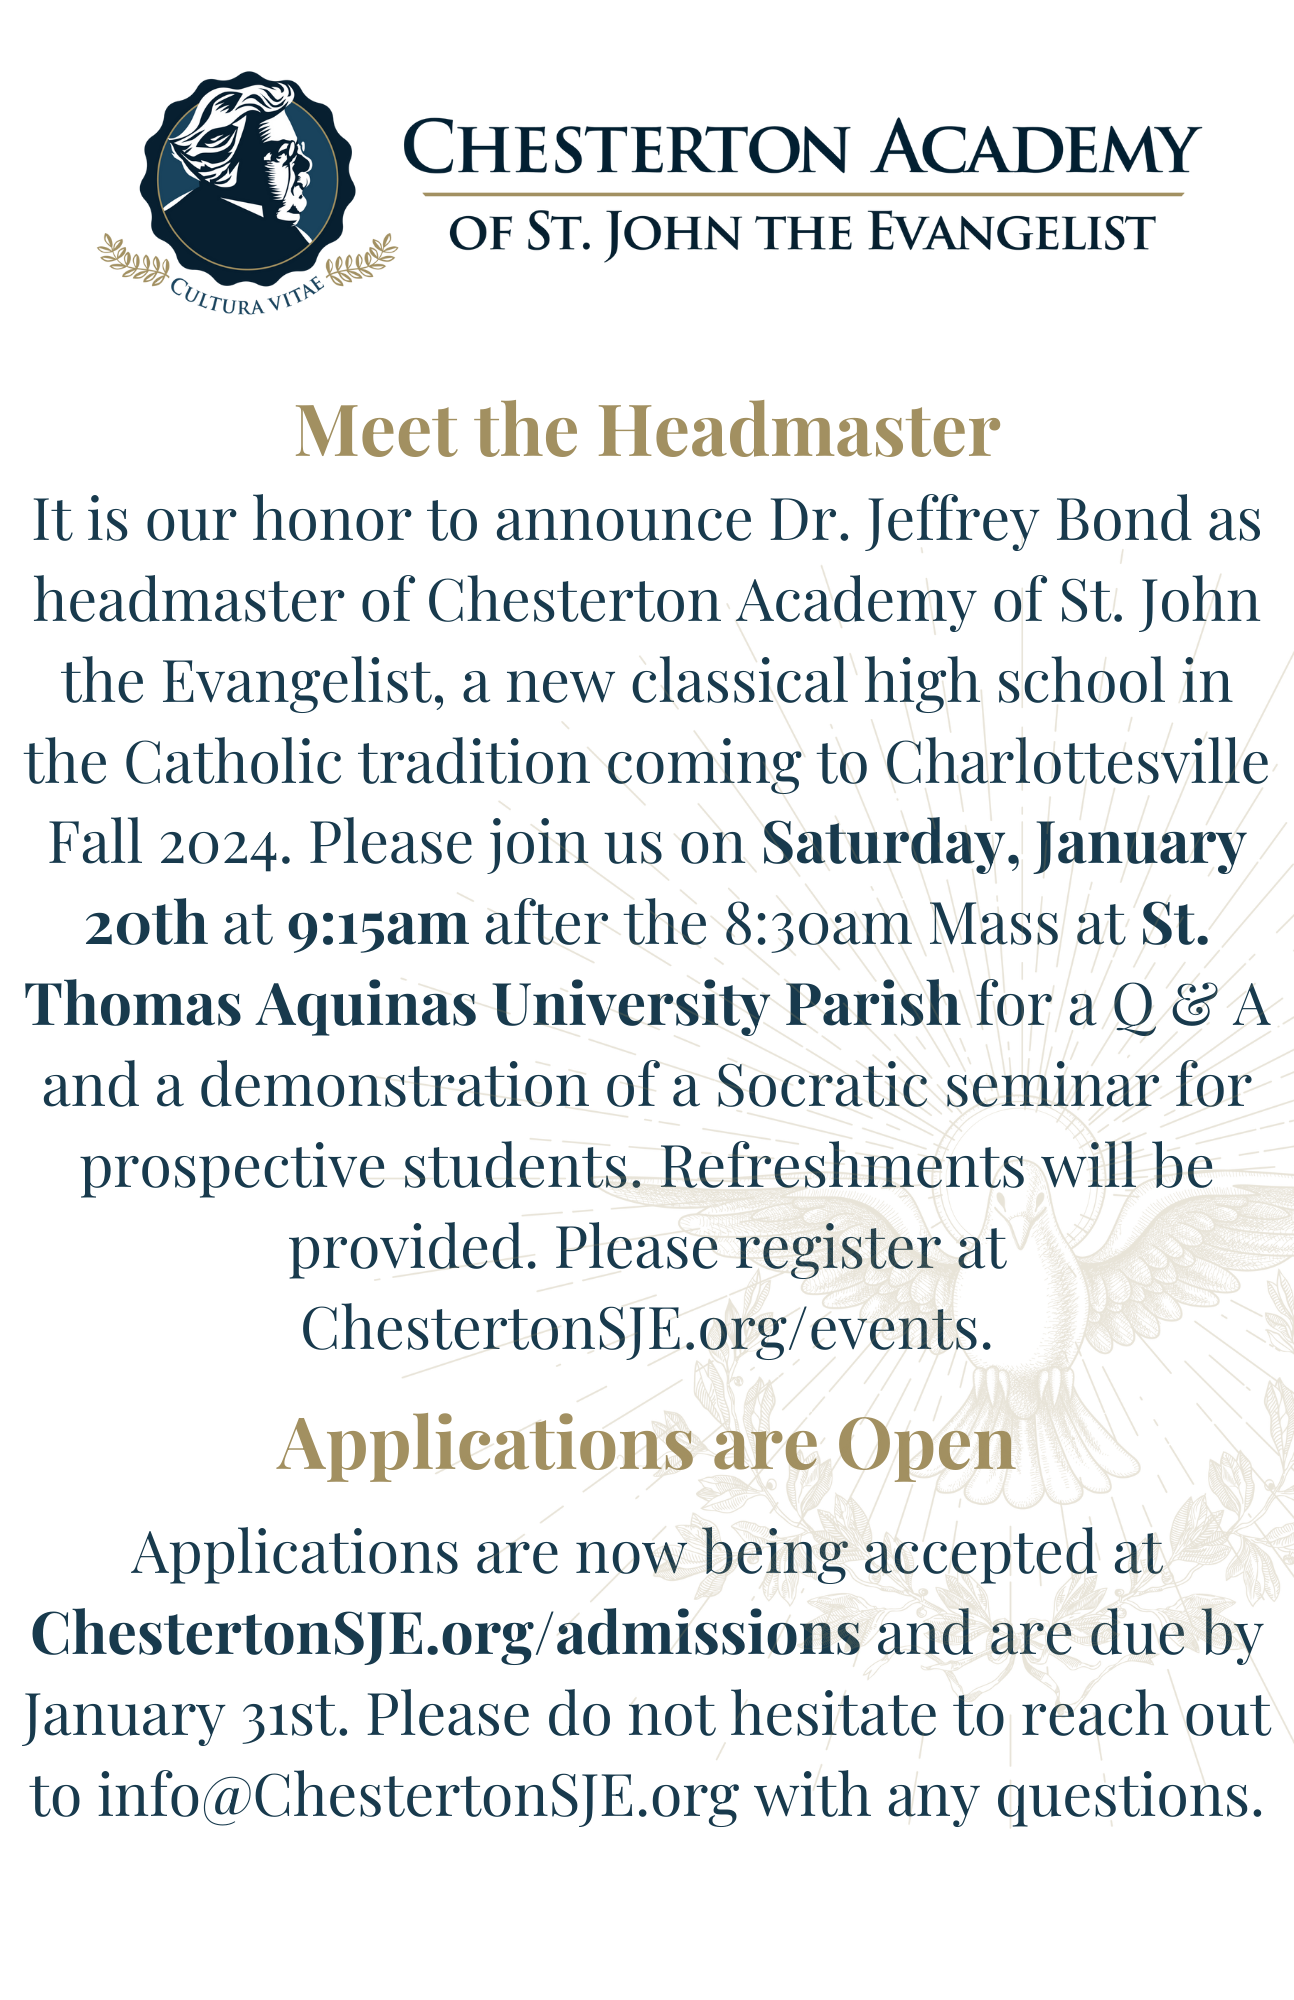 Chesterton Academy SJE - Meet the Headmaster Event